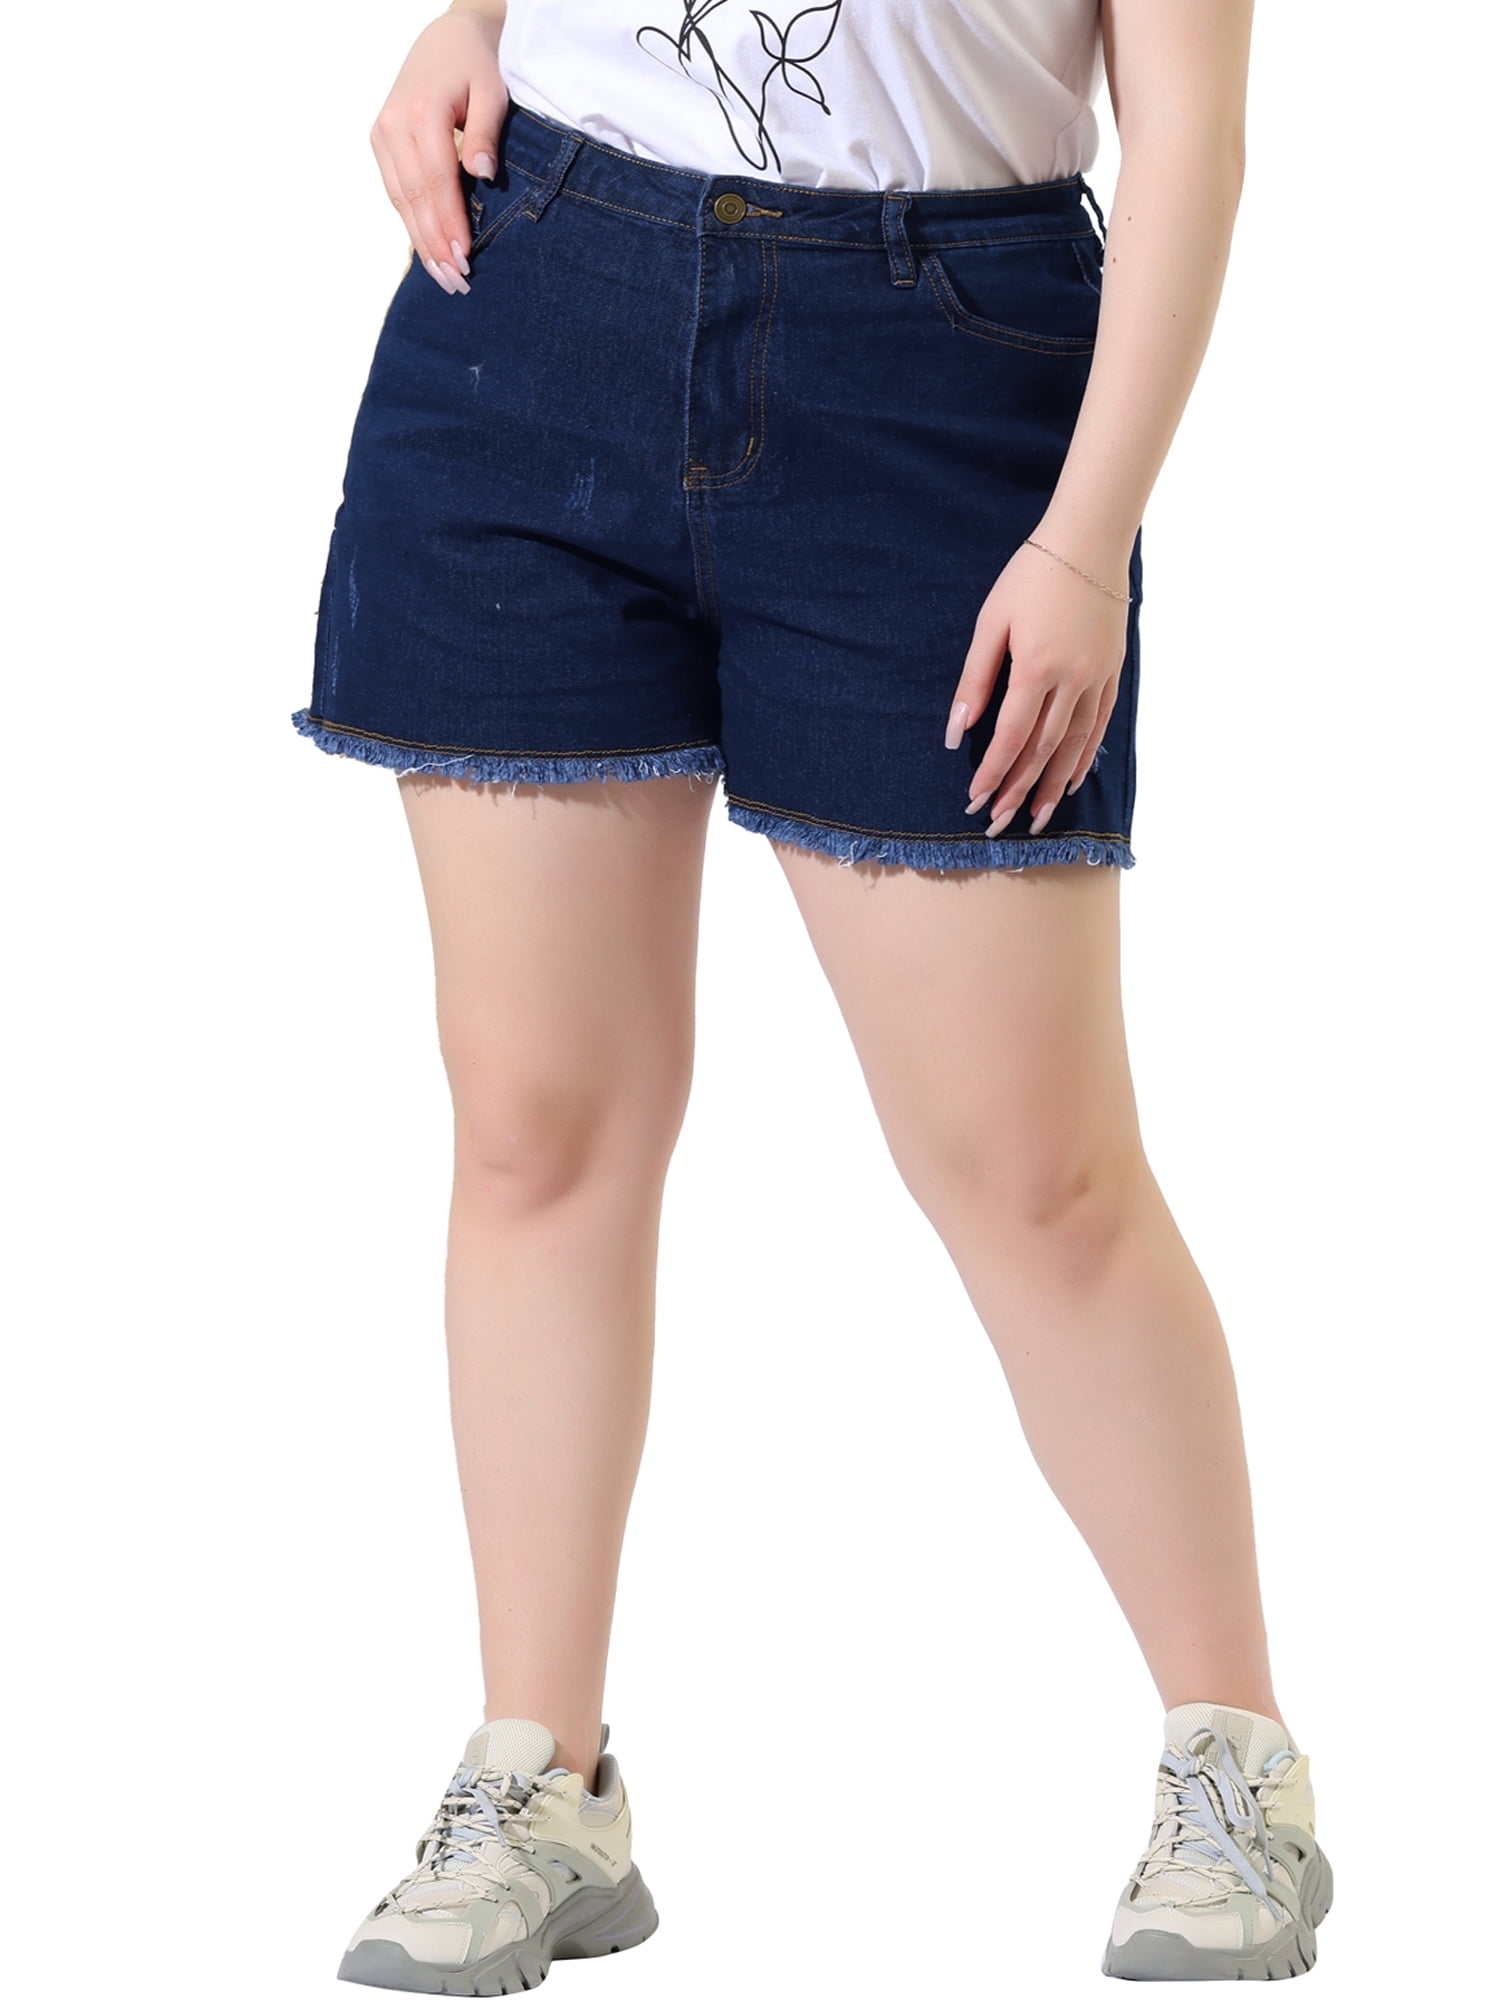 Gloria Vanderbilt Blue Jean Denim Shorts Skimmers Plus Sizes 20 22 24 